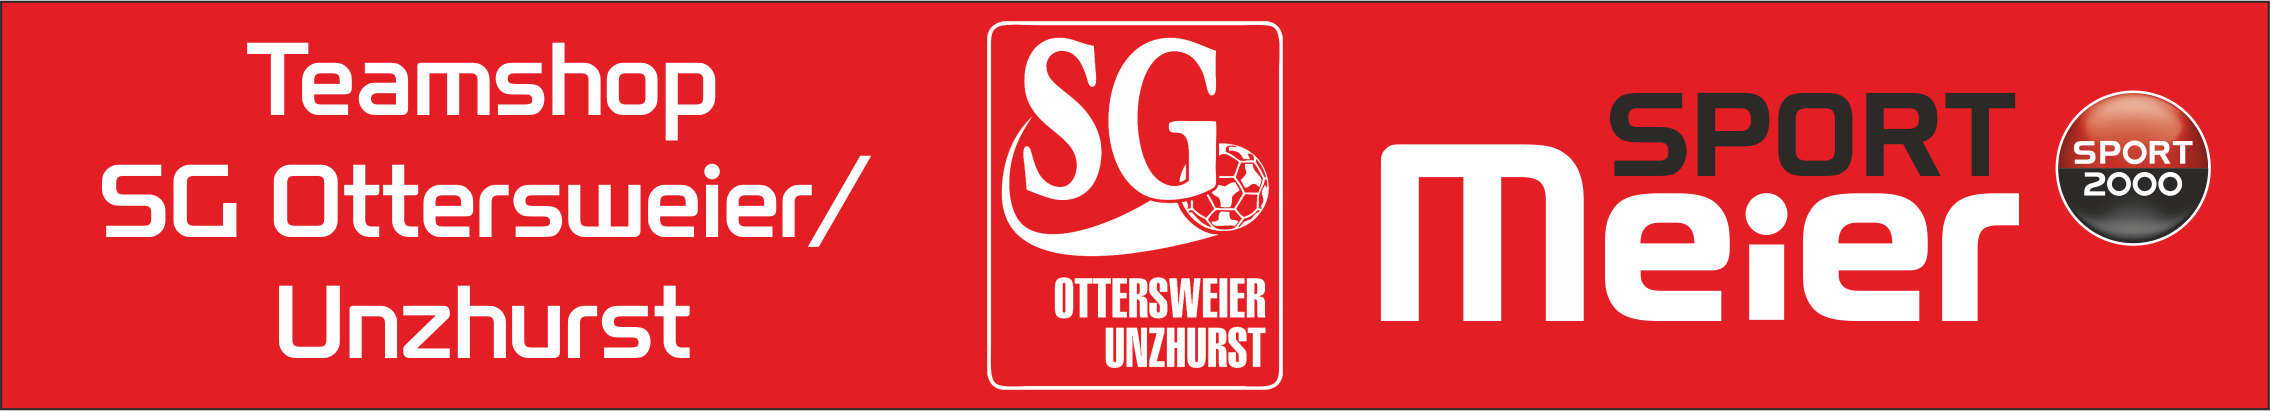 SG Ottersweier Unzhurst Title Image